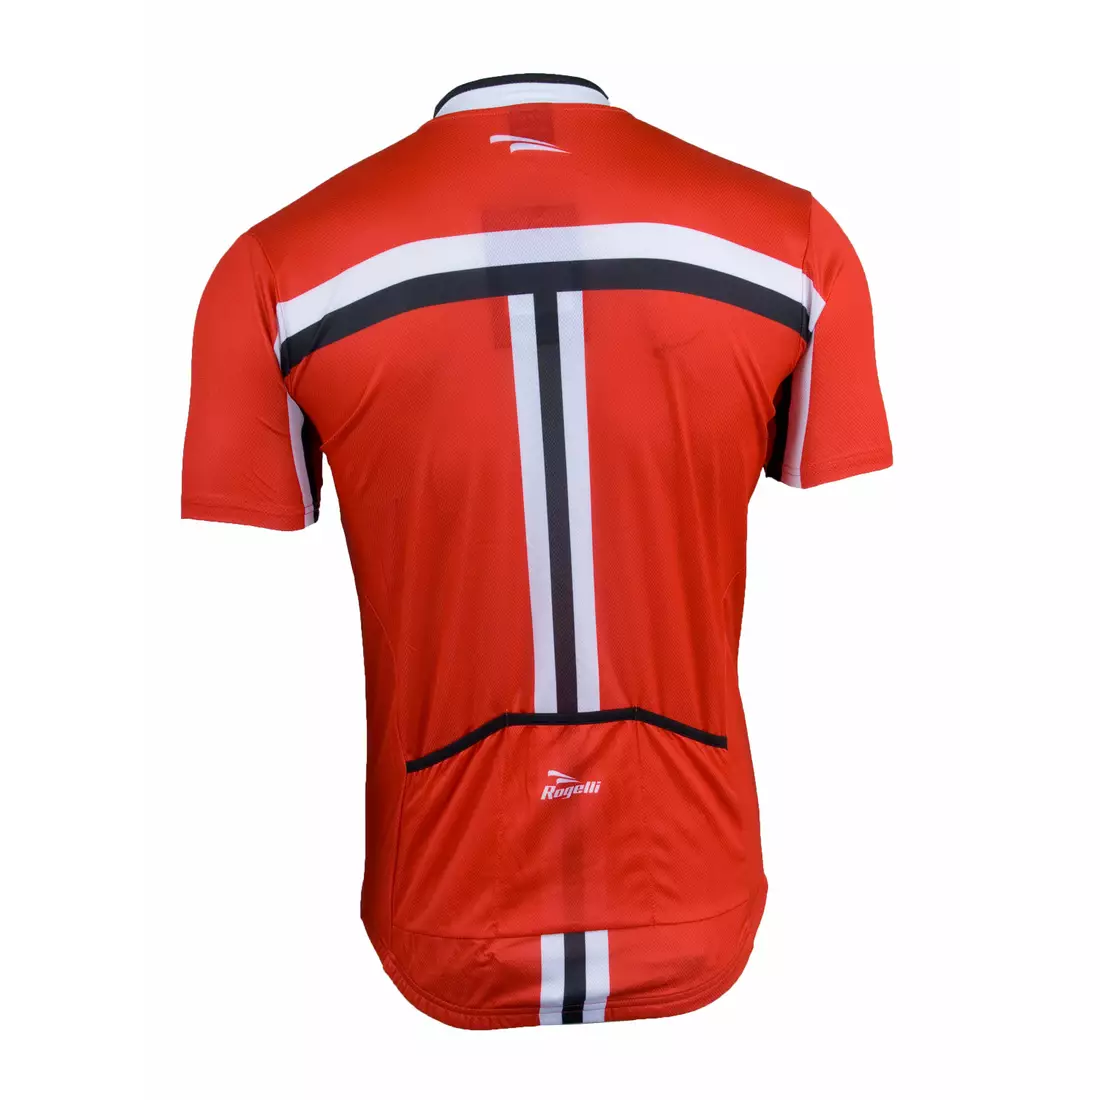 ROGELLI BRESCIA men's cycling jersey 001.064, Red